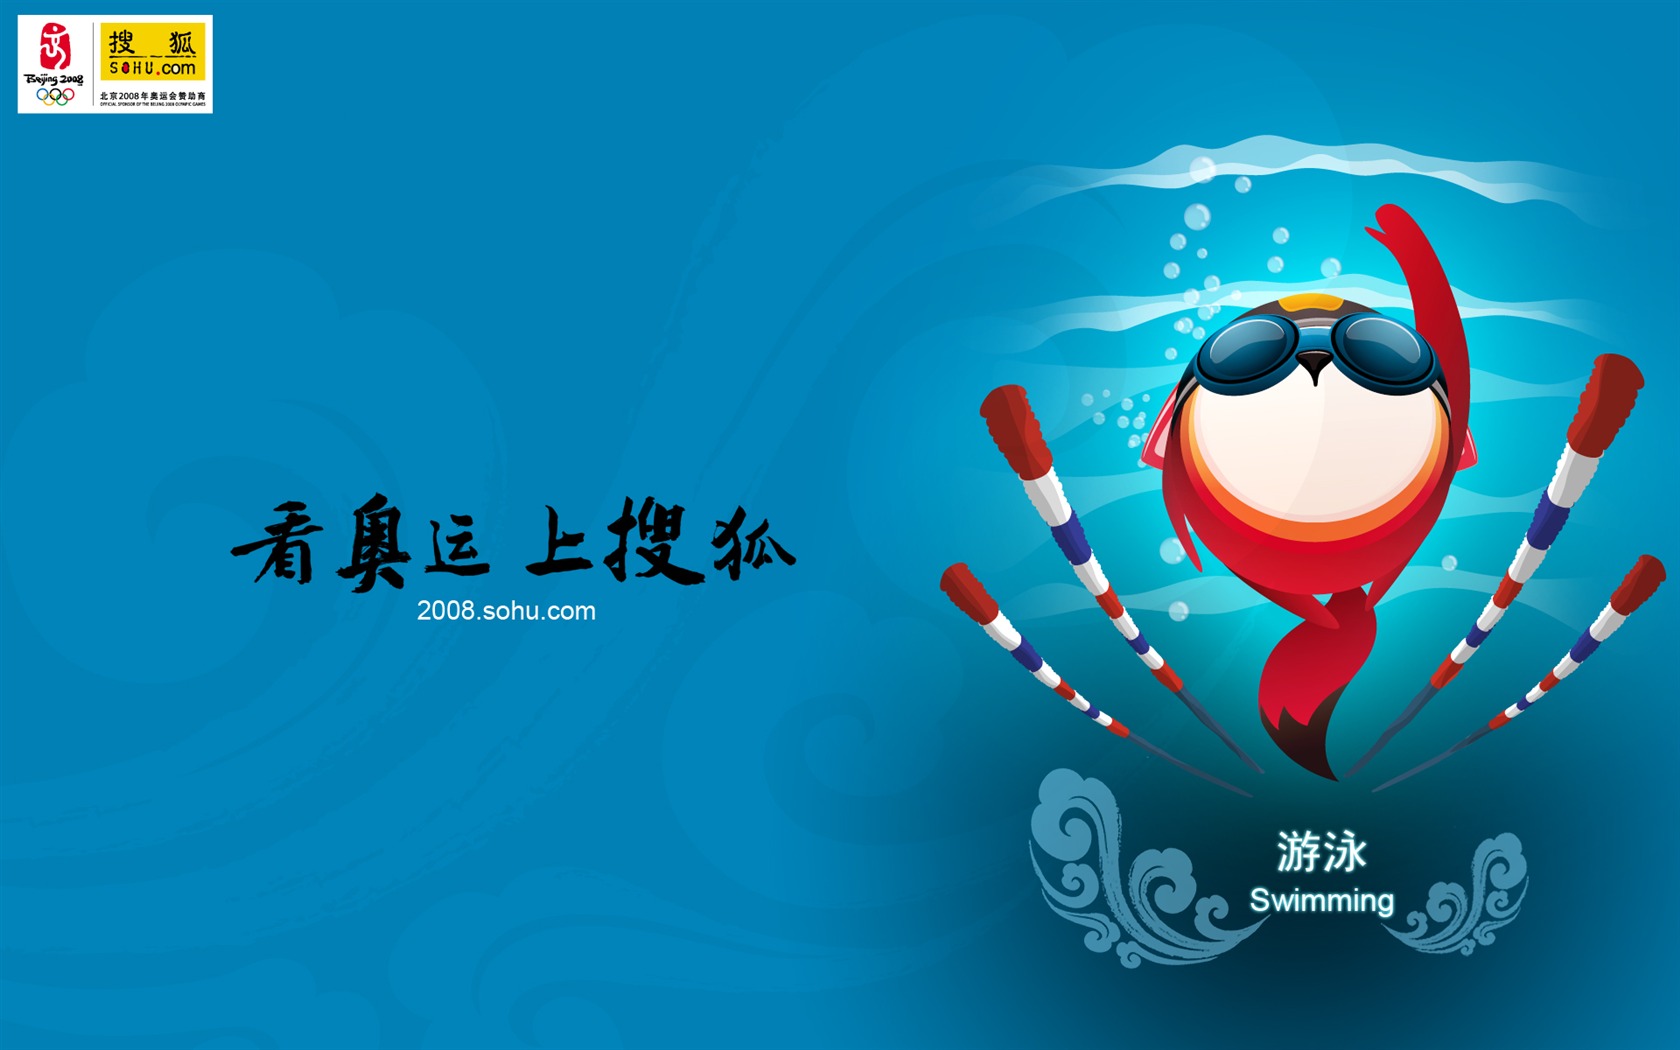 Sohu Olympic sports style wallpaper #26 - 1680x1050